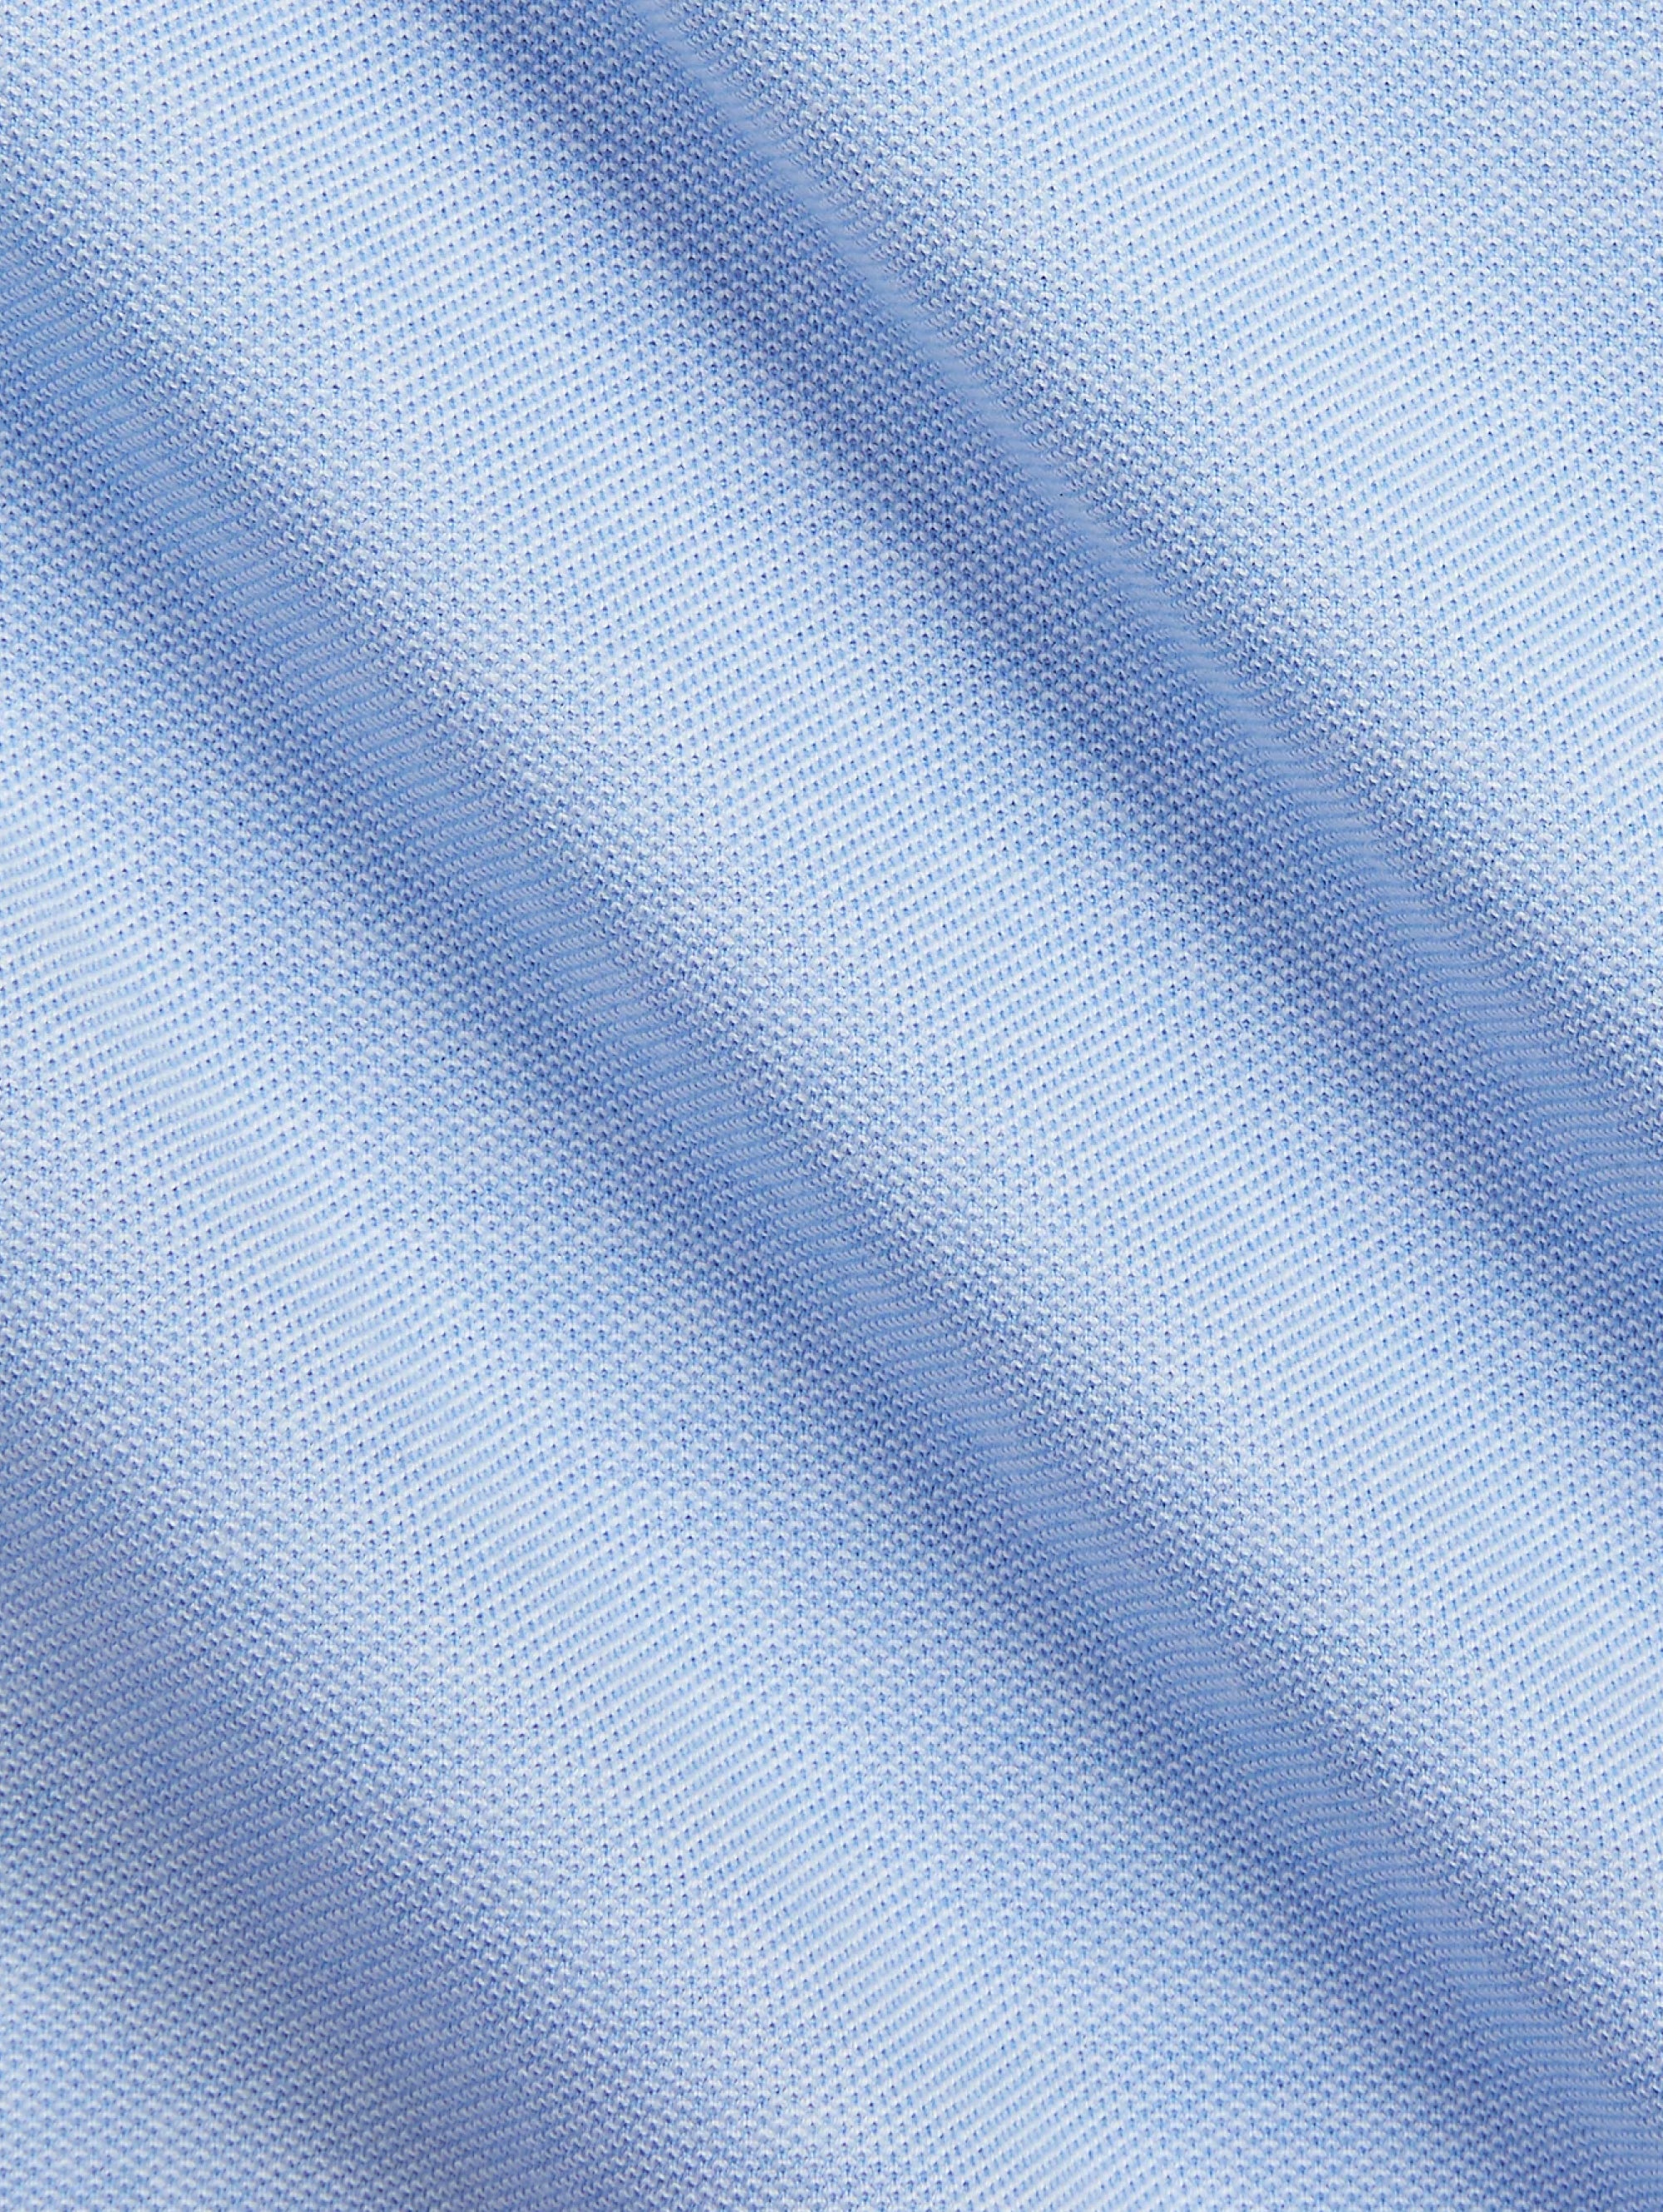 Knit Oxford Blue Shirt